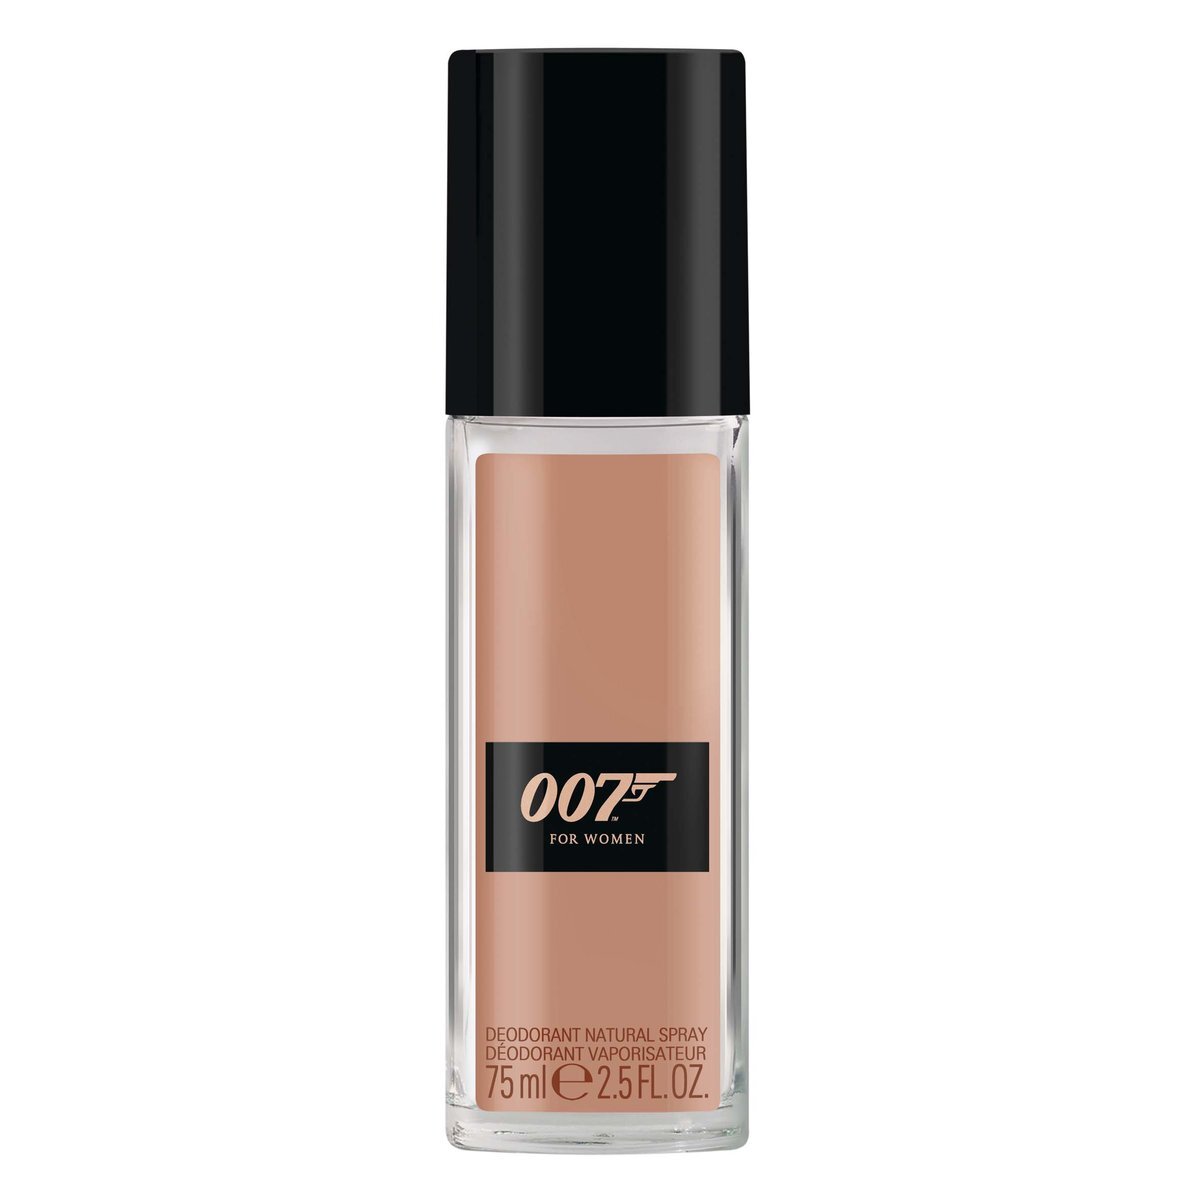 James Bond Woman - 75ml - Deodorant